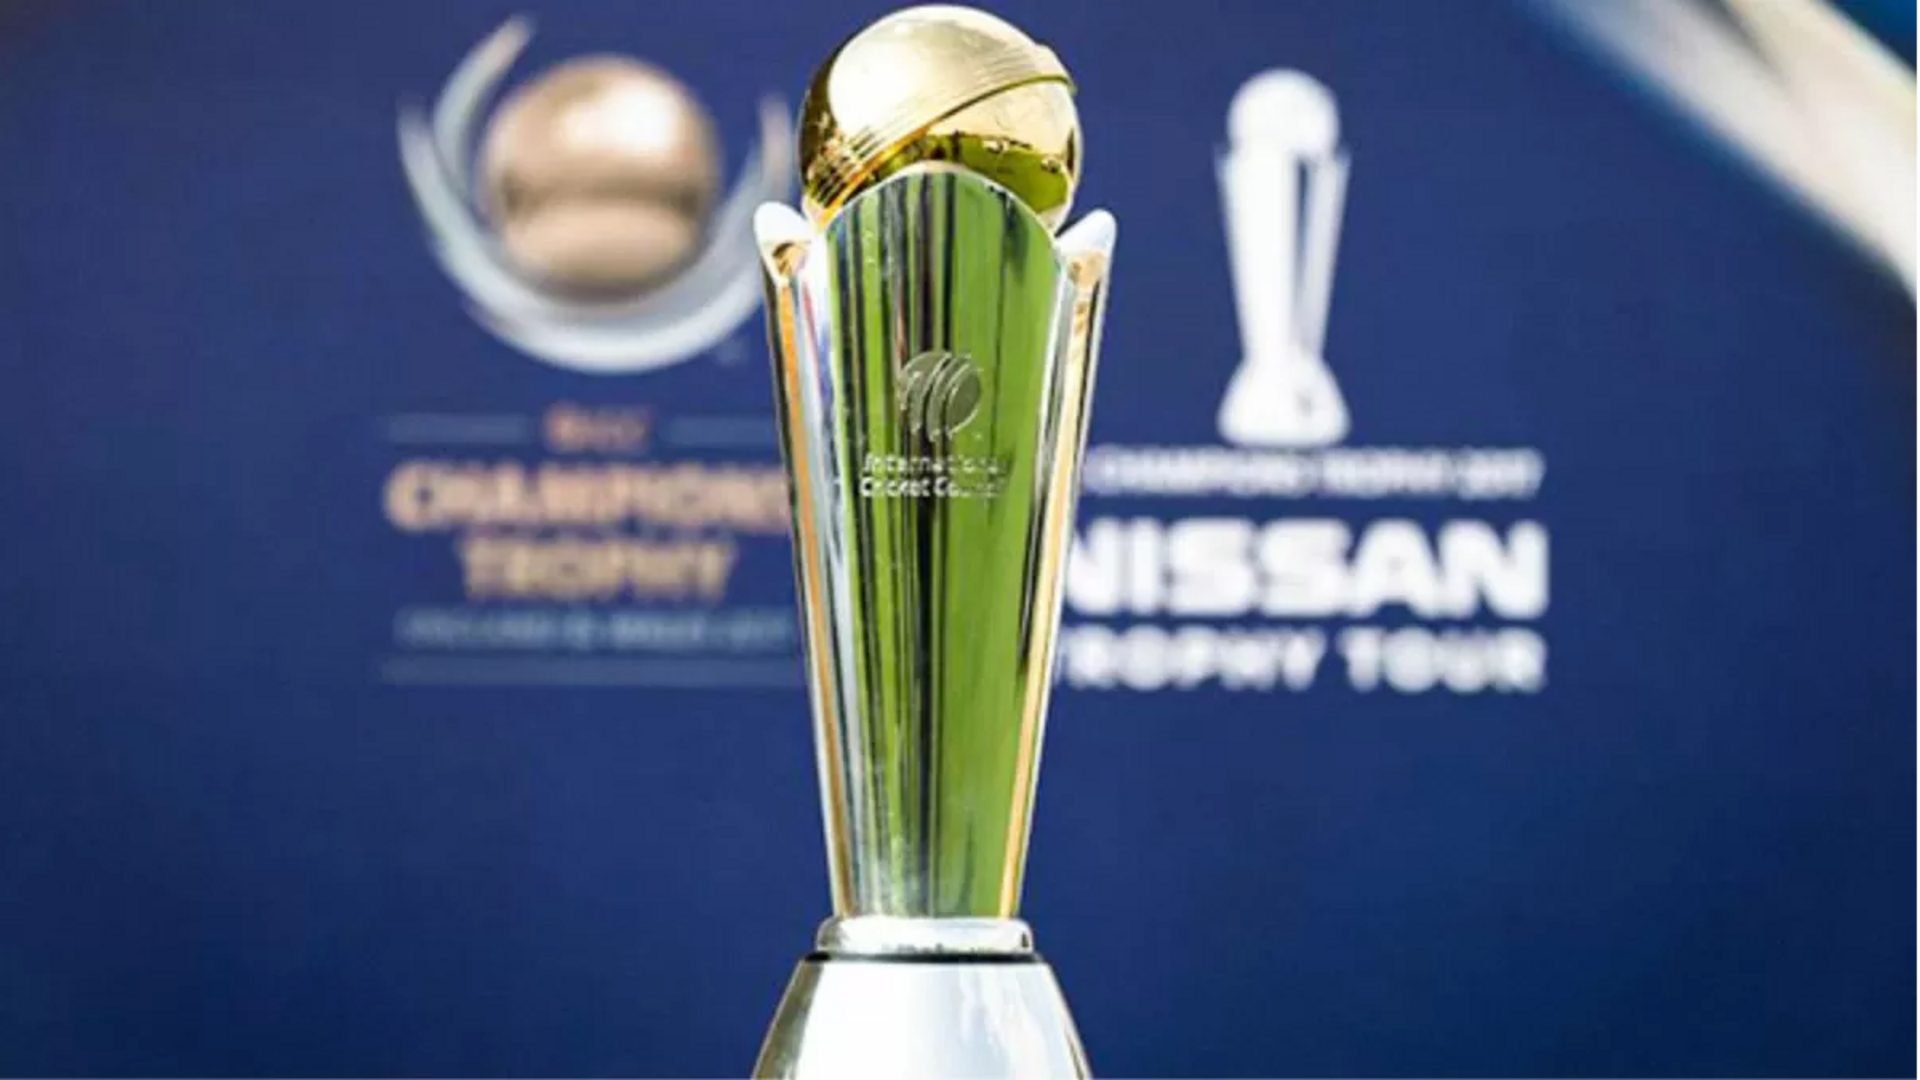 Champions Trophy: ఛాంపియన్స్ ట్రోఫీ కోసం భారత్ పాకిస్థాన్ వెళ్తుందా? బీసీసీఐ కీలక ప్రకటన 